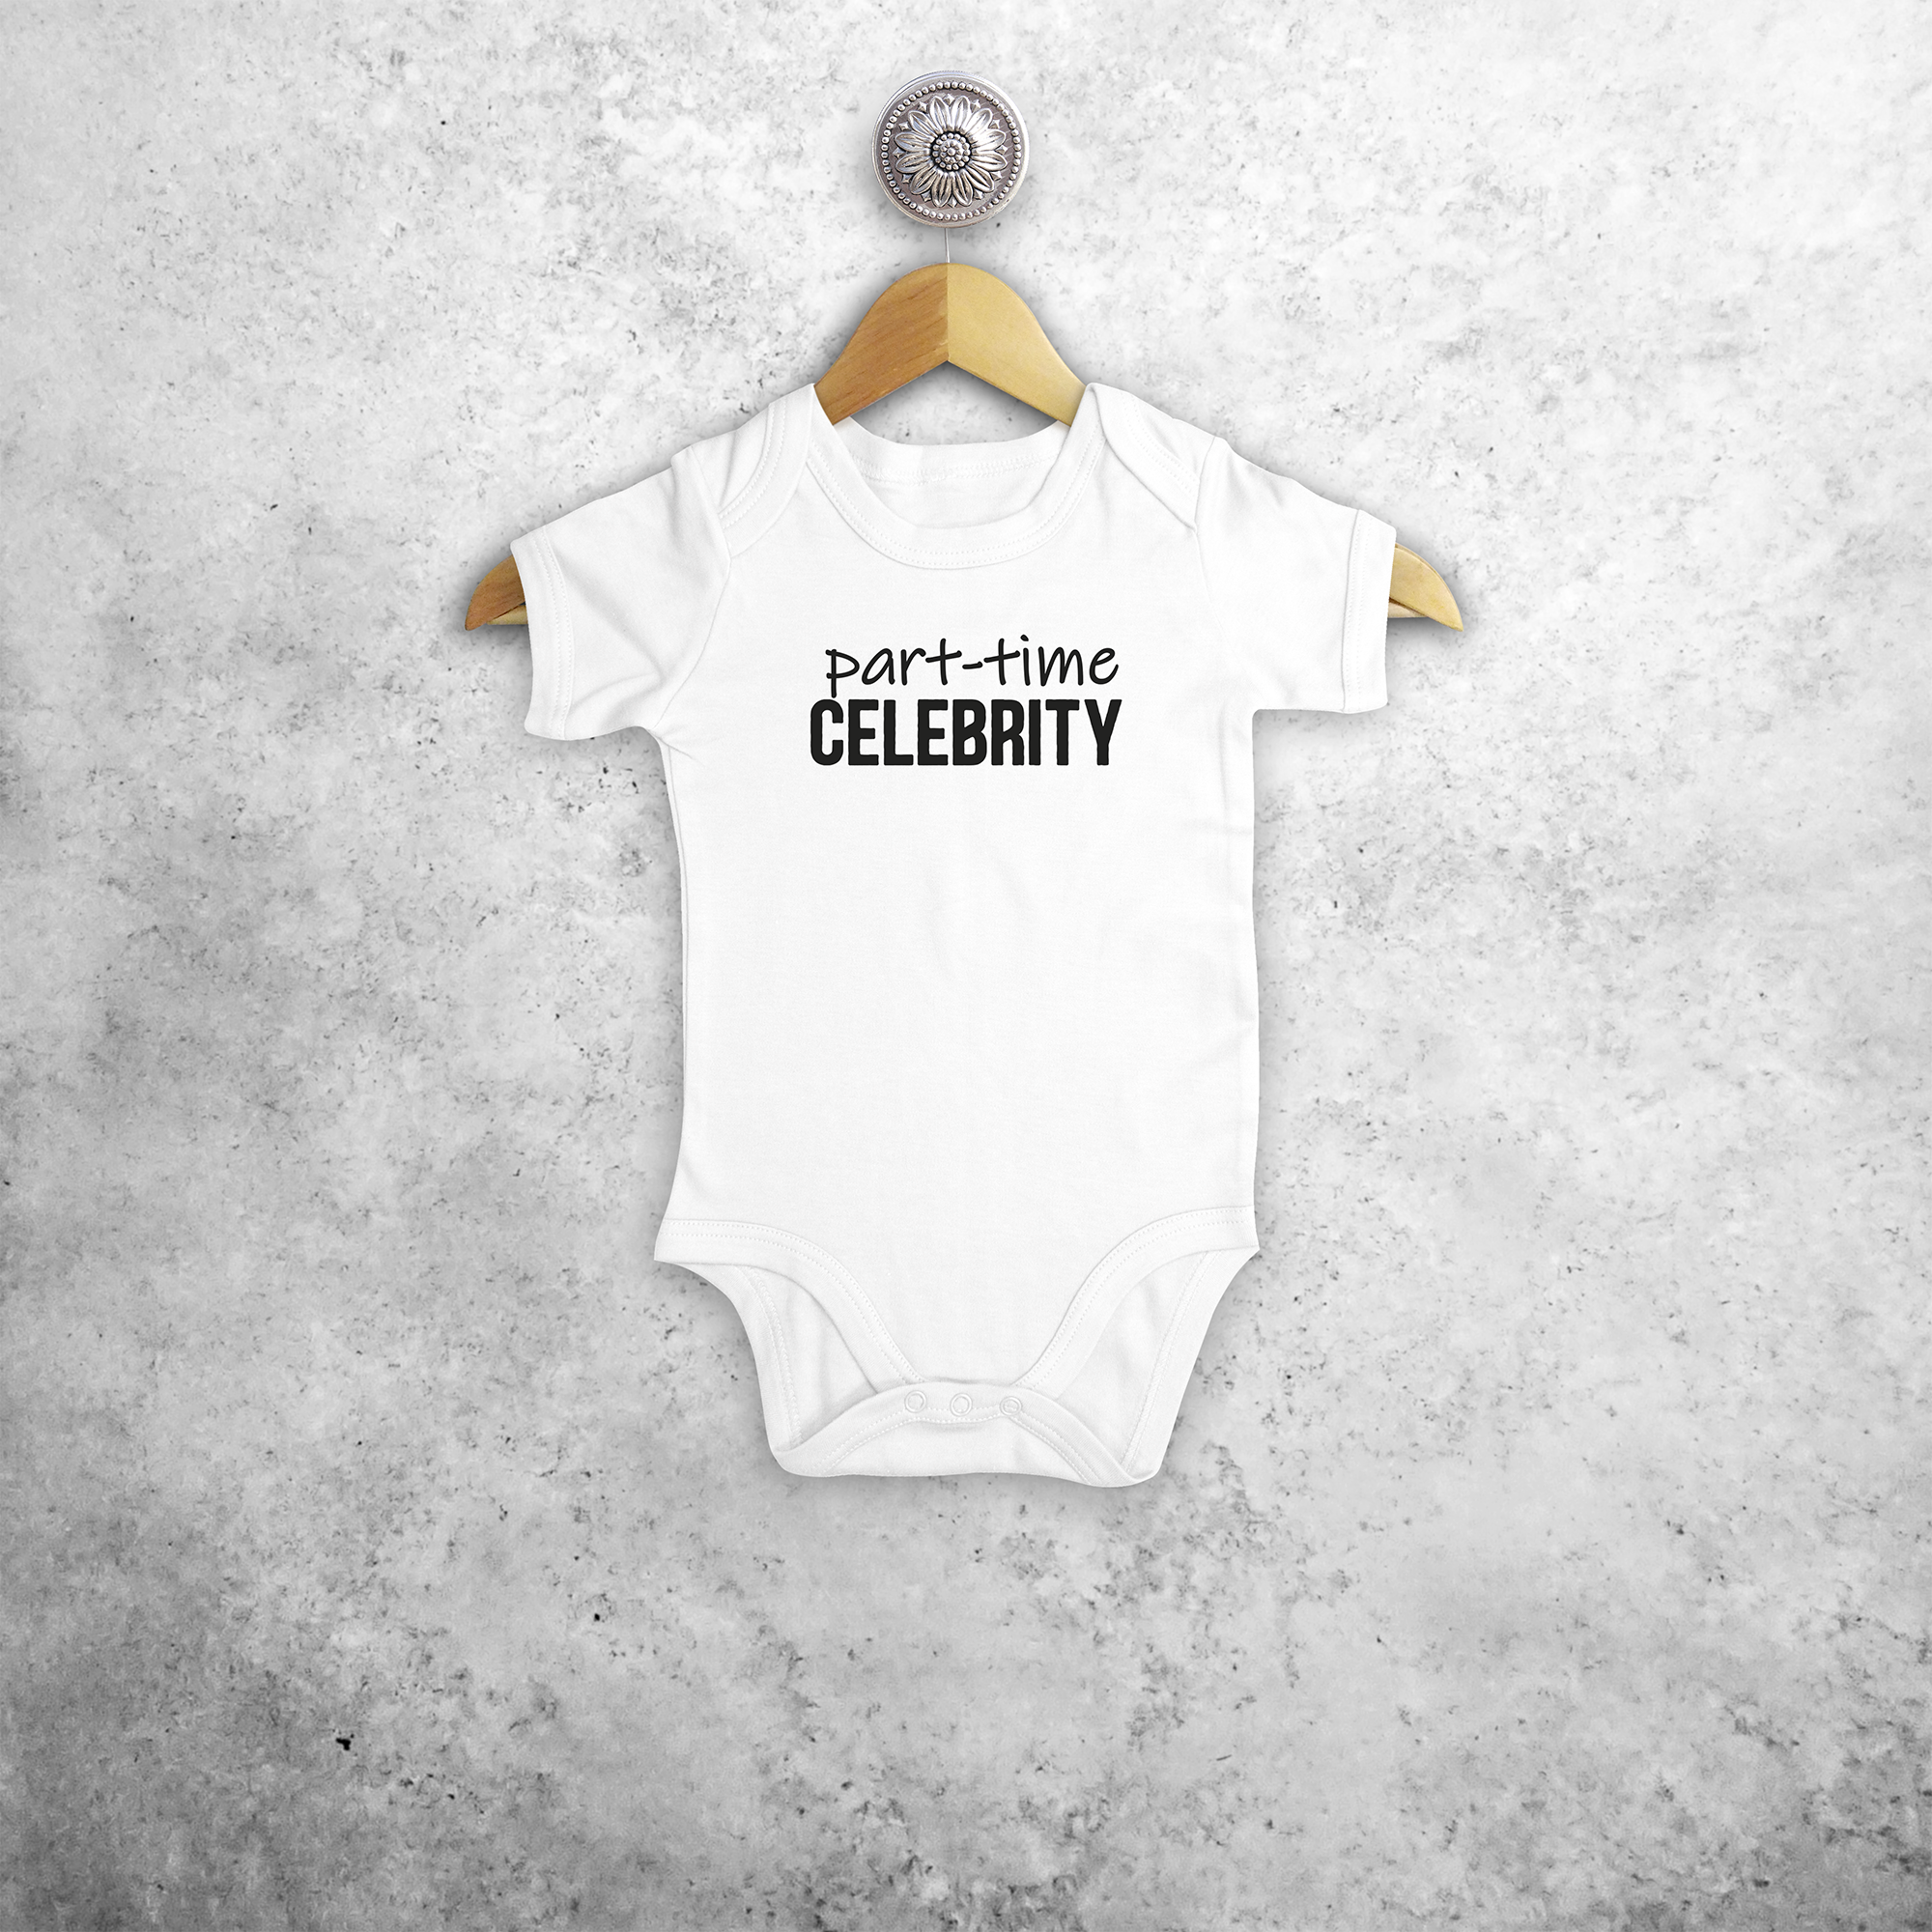 'Part-time celebrity' baby shortsleeve bodysuit